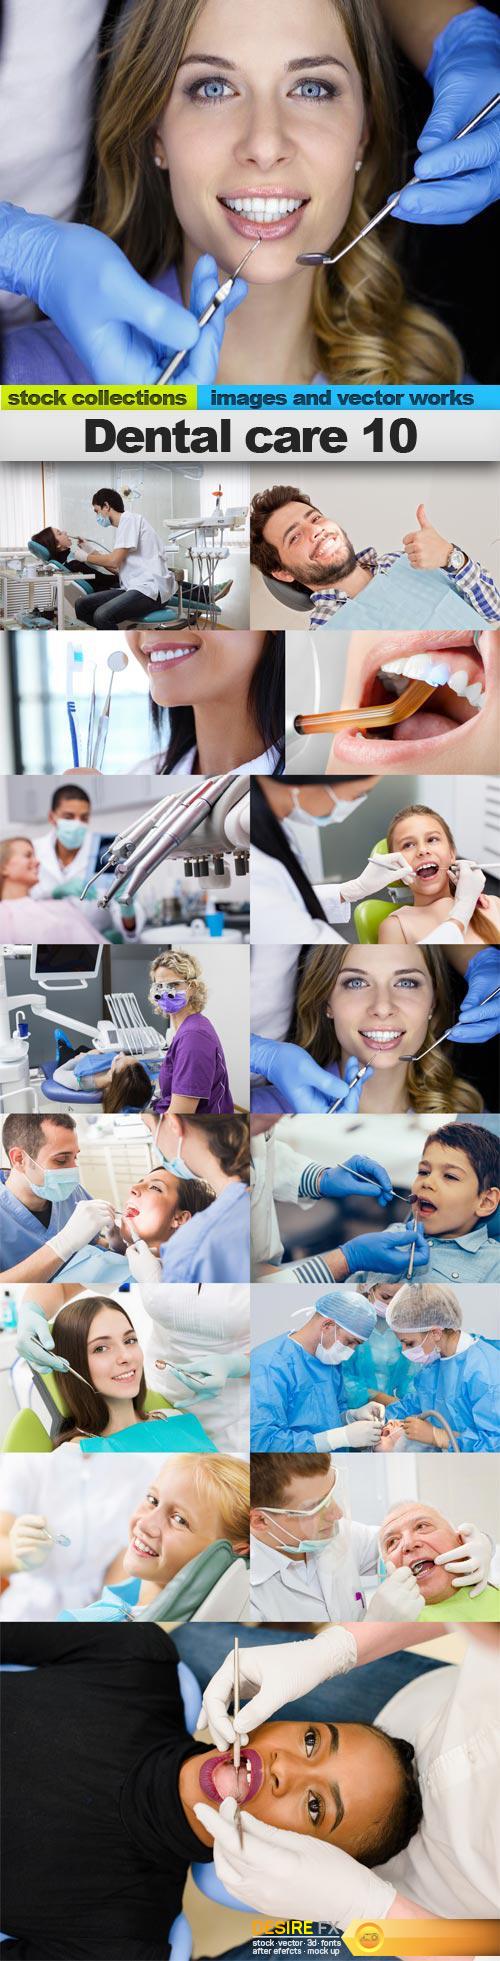 Dental care 10, 15 x UHQ JPEG 